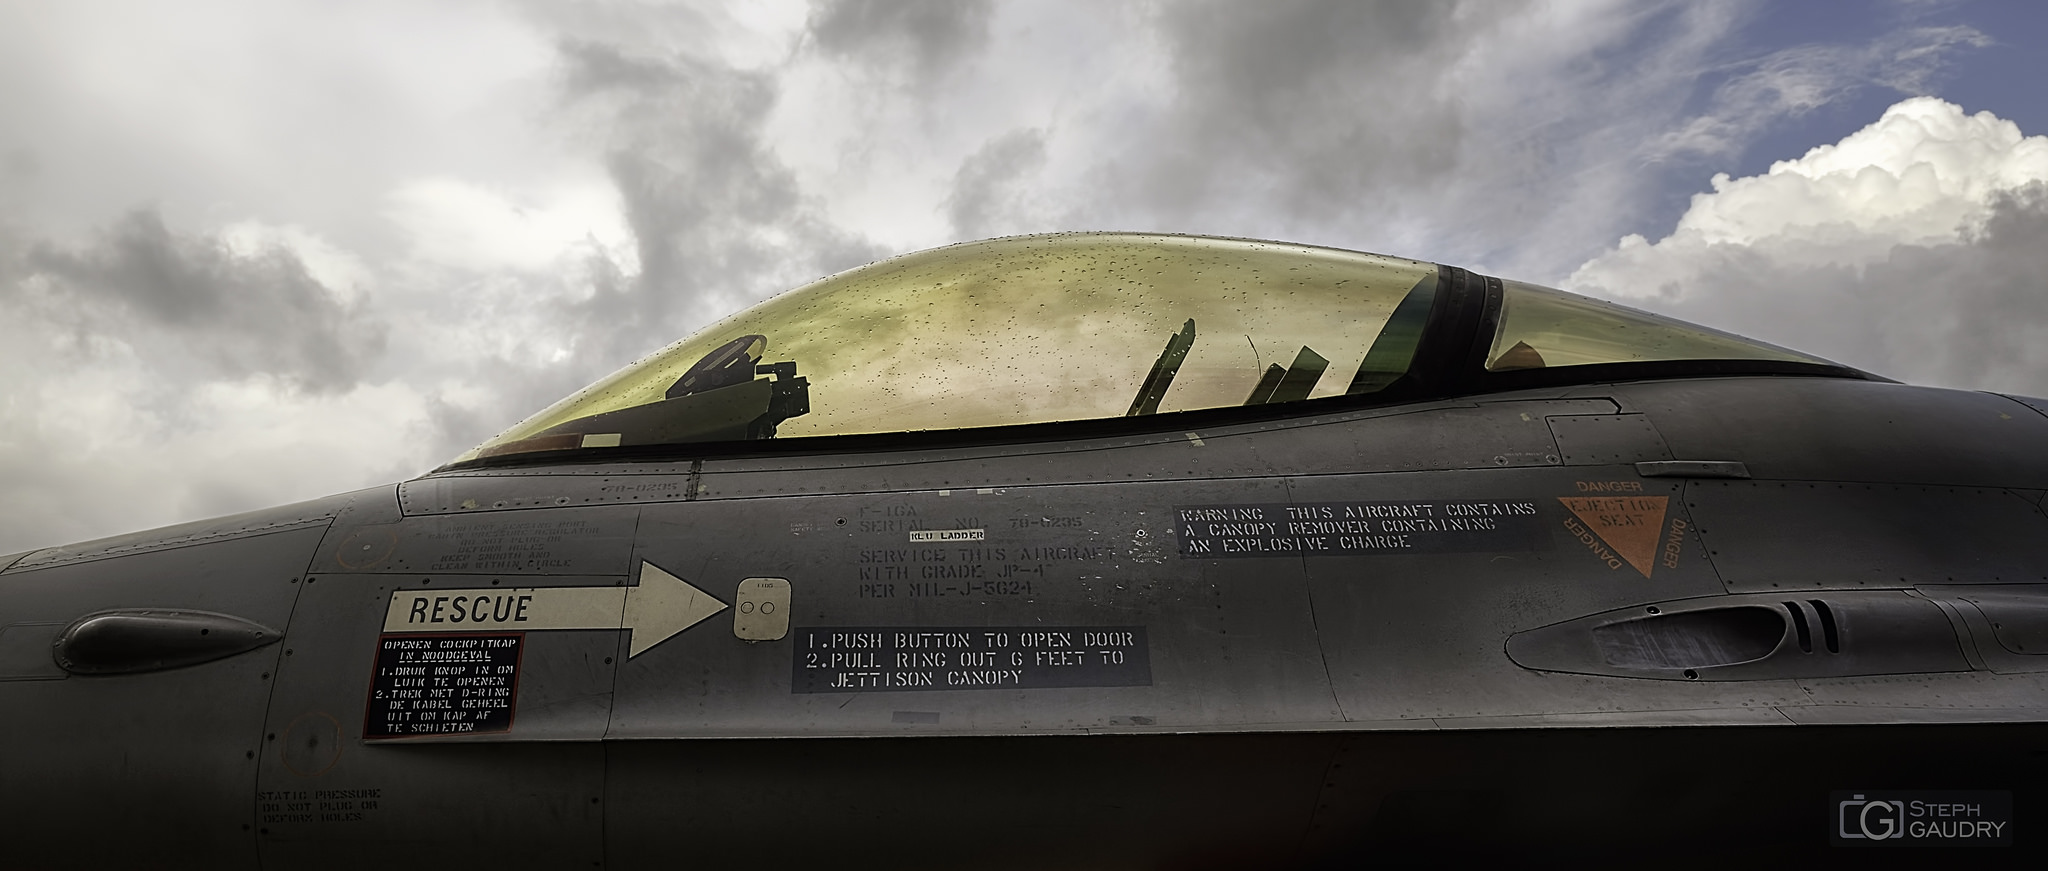 Machines volantes / F-16 cockpit v2